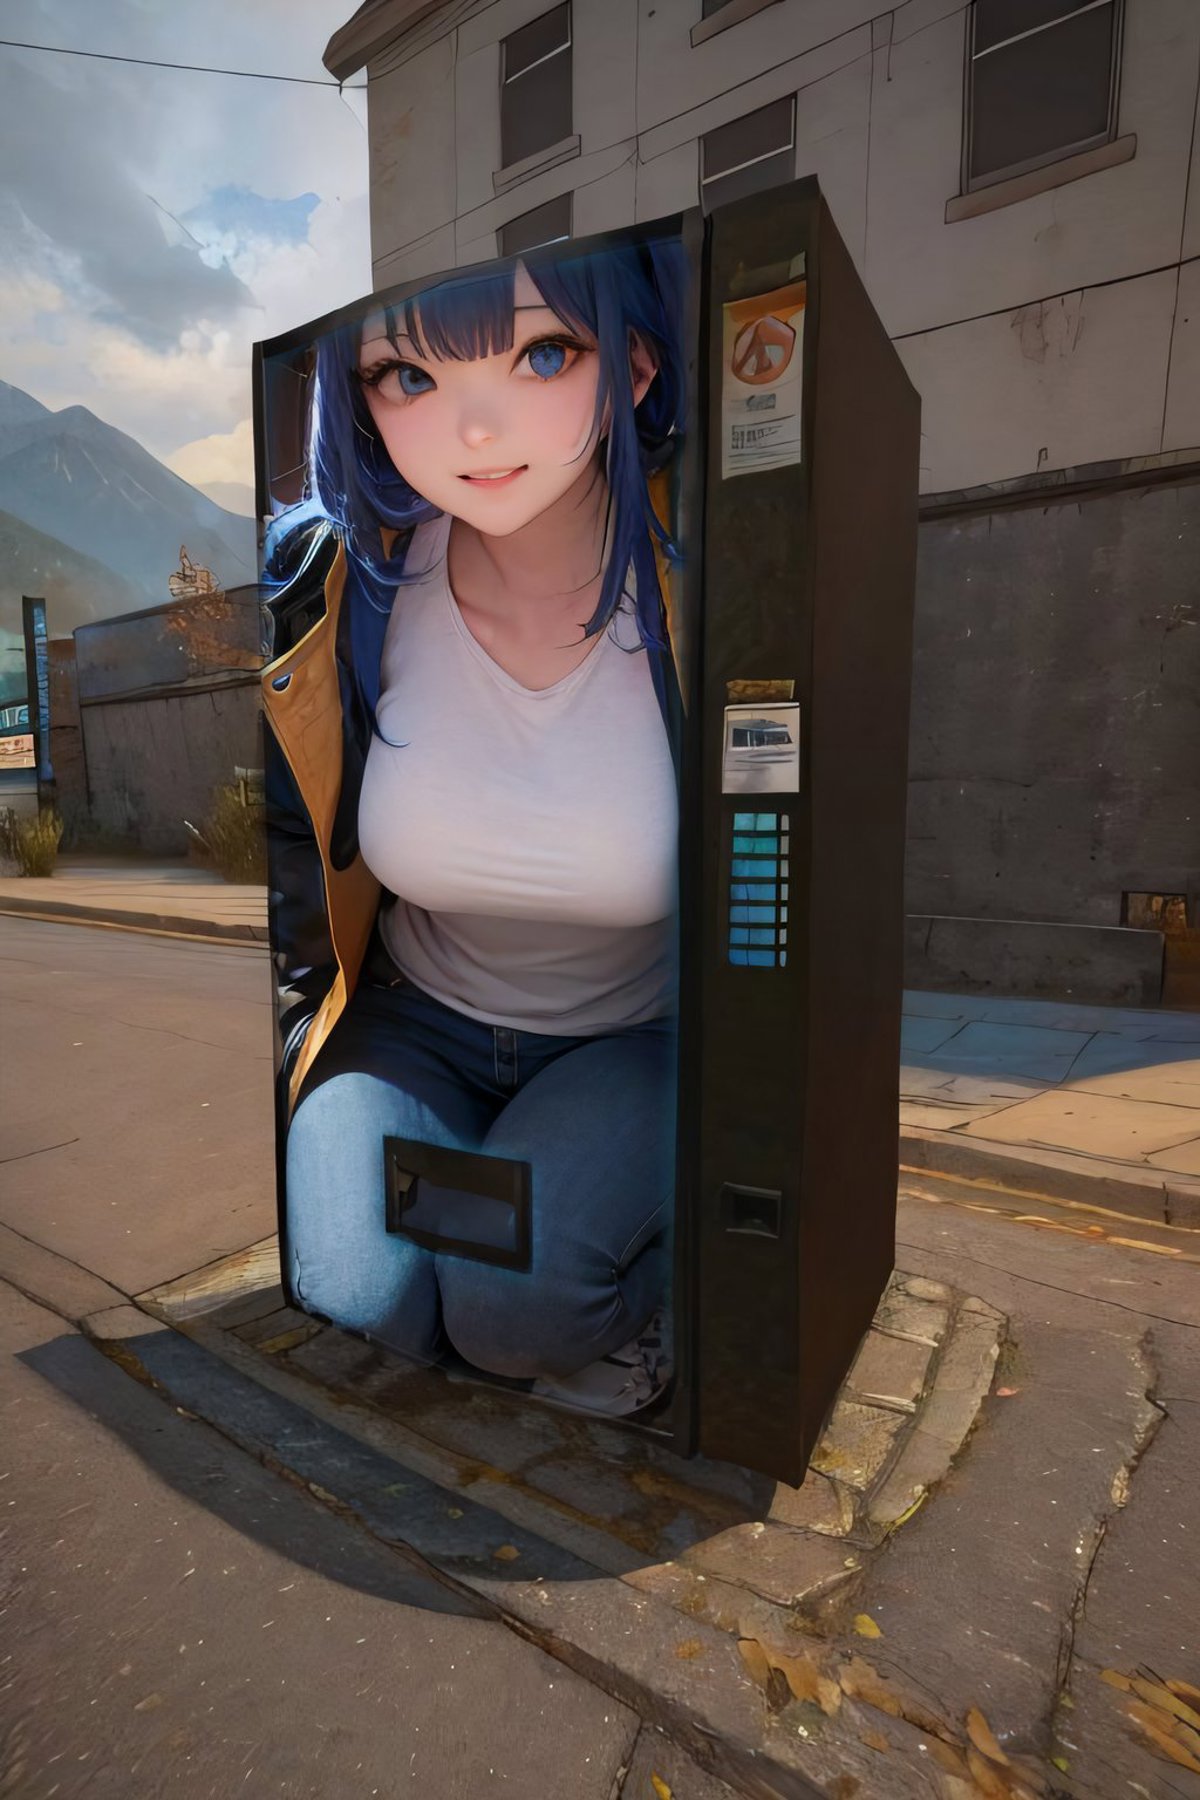 Vending Machine | Half-Life 2 image by justTNP